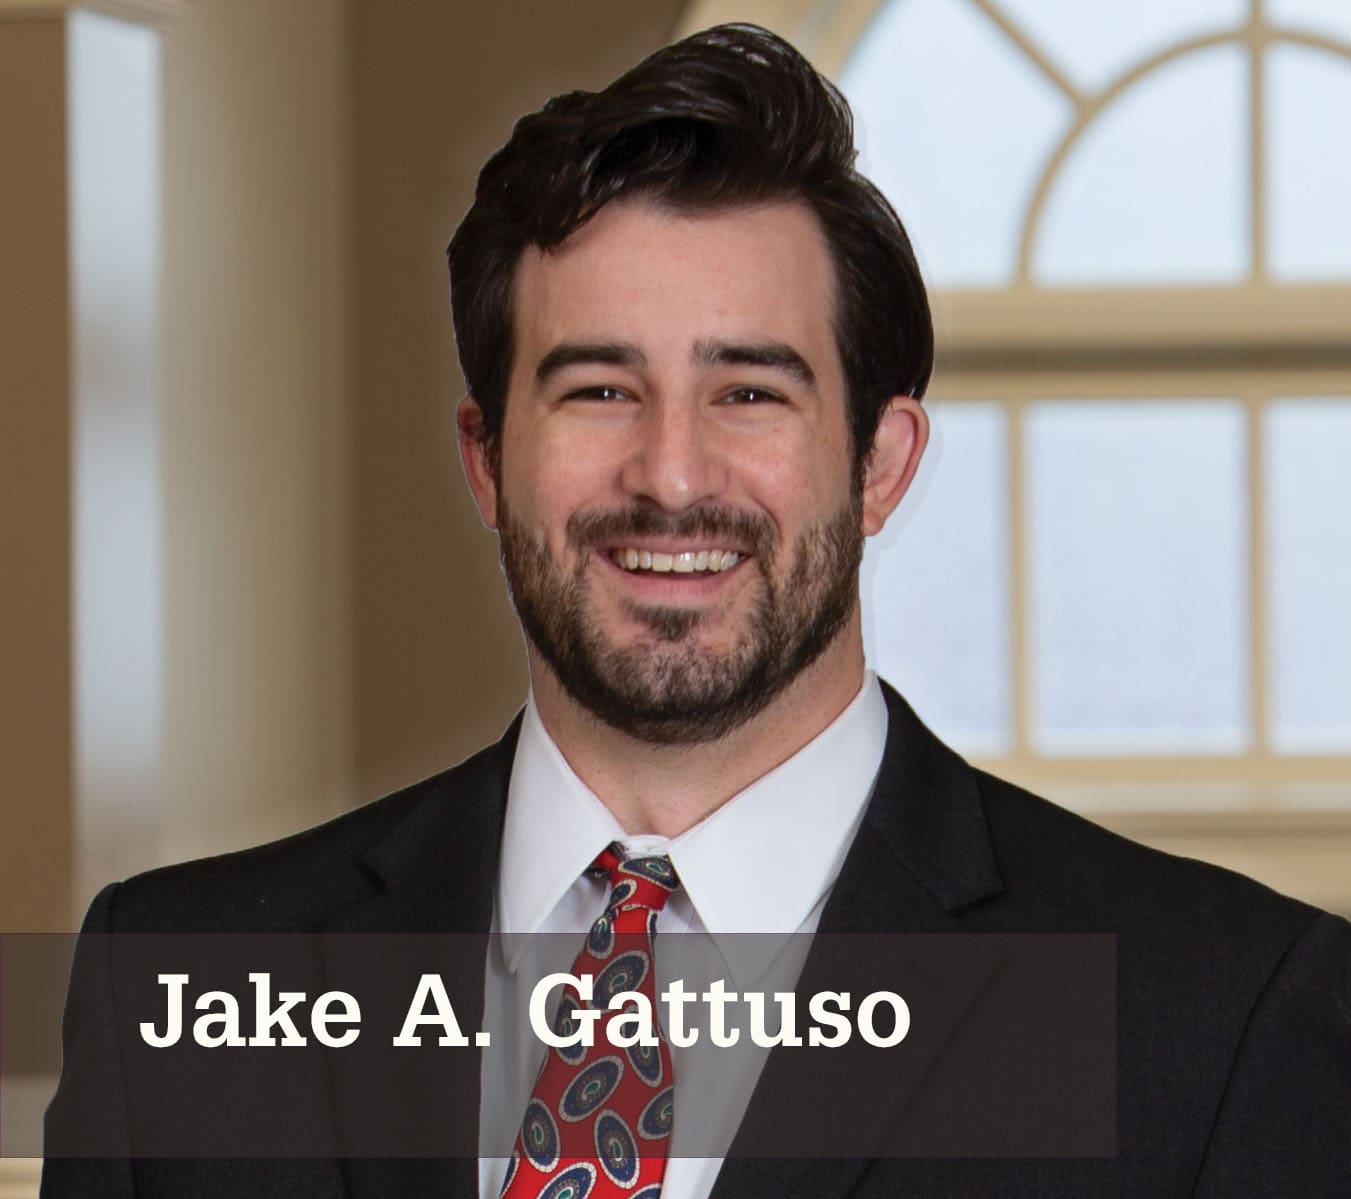 Jake A. Gattuso